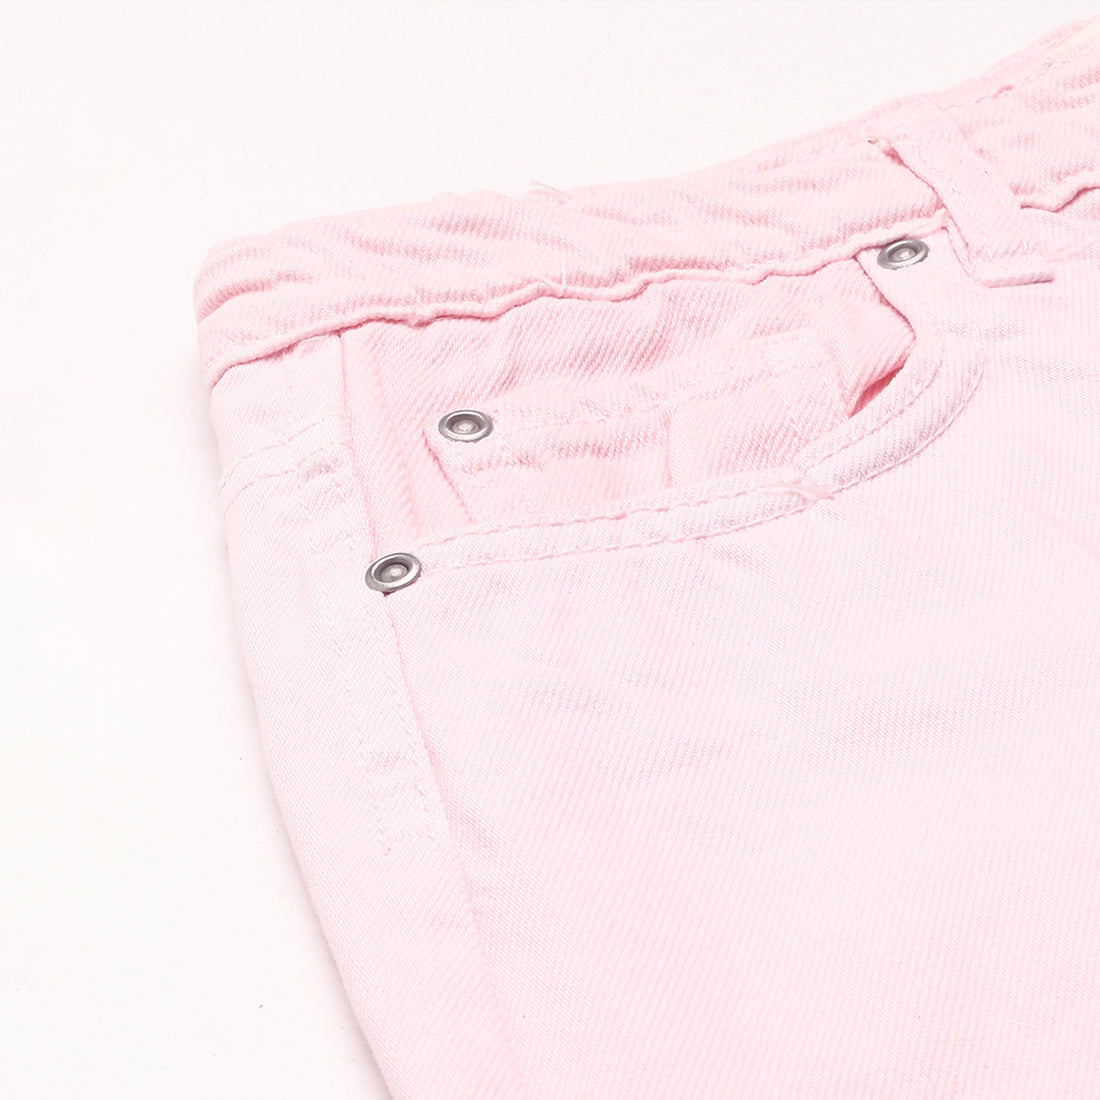 Pink Jeans High Waist Raw Hem Shorts